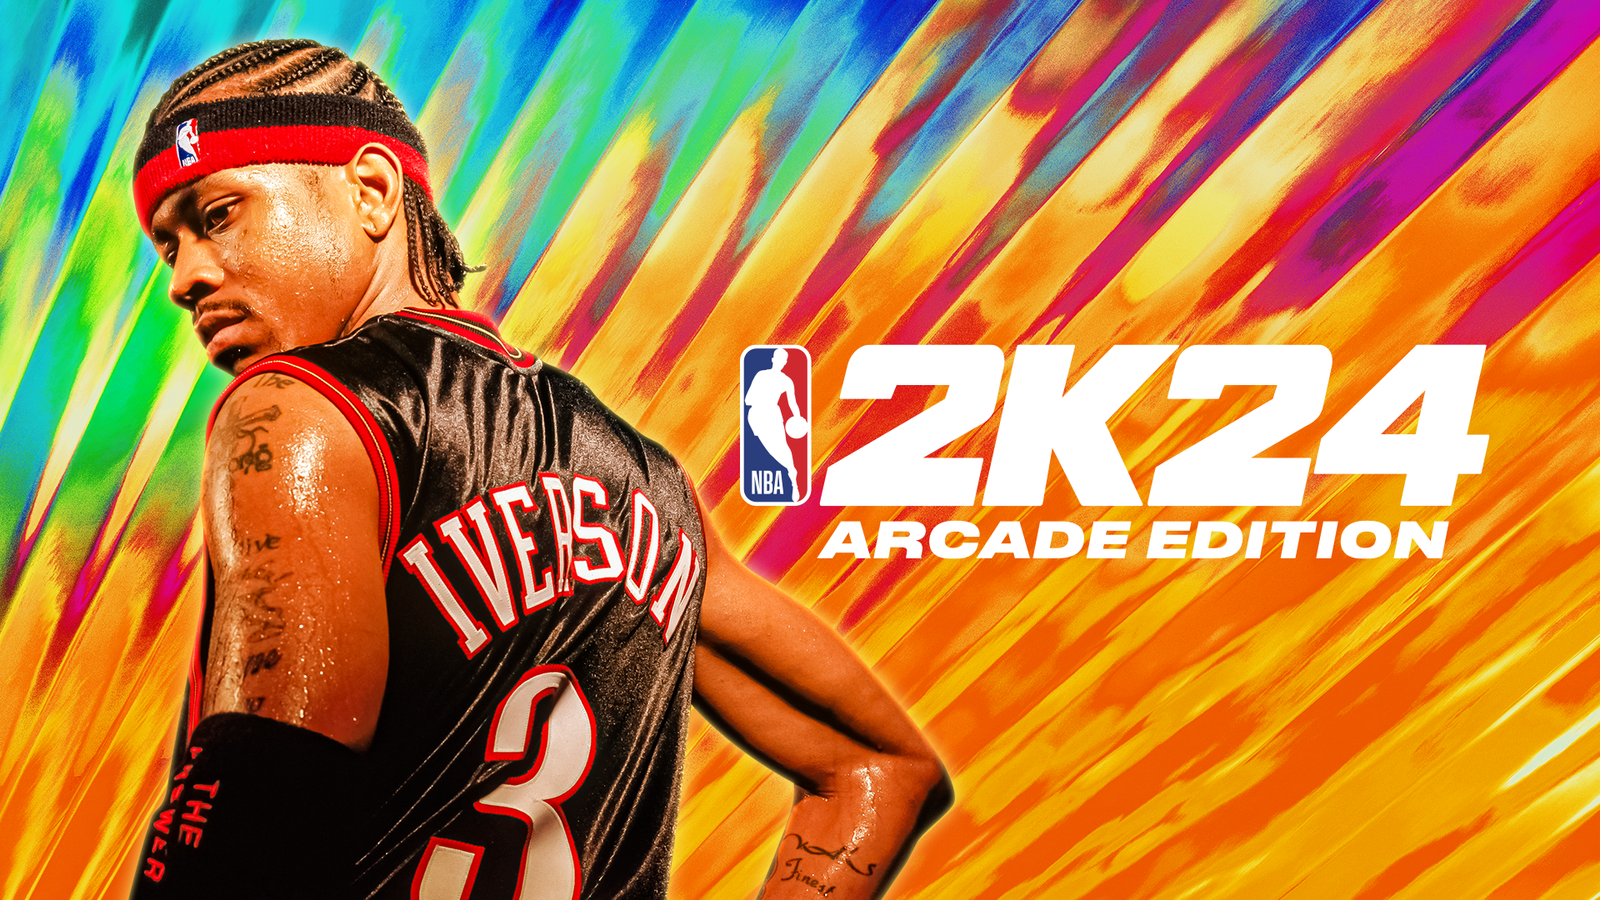 NBA 2K24 Arcade Edition cover athlete Allen Iverson